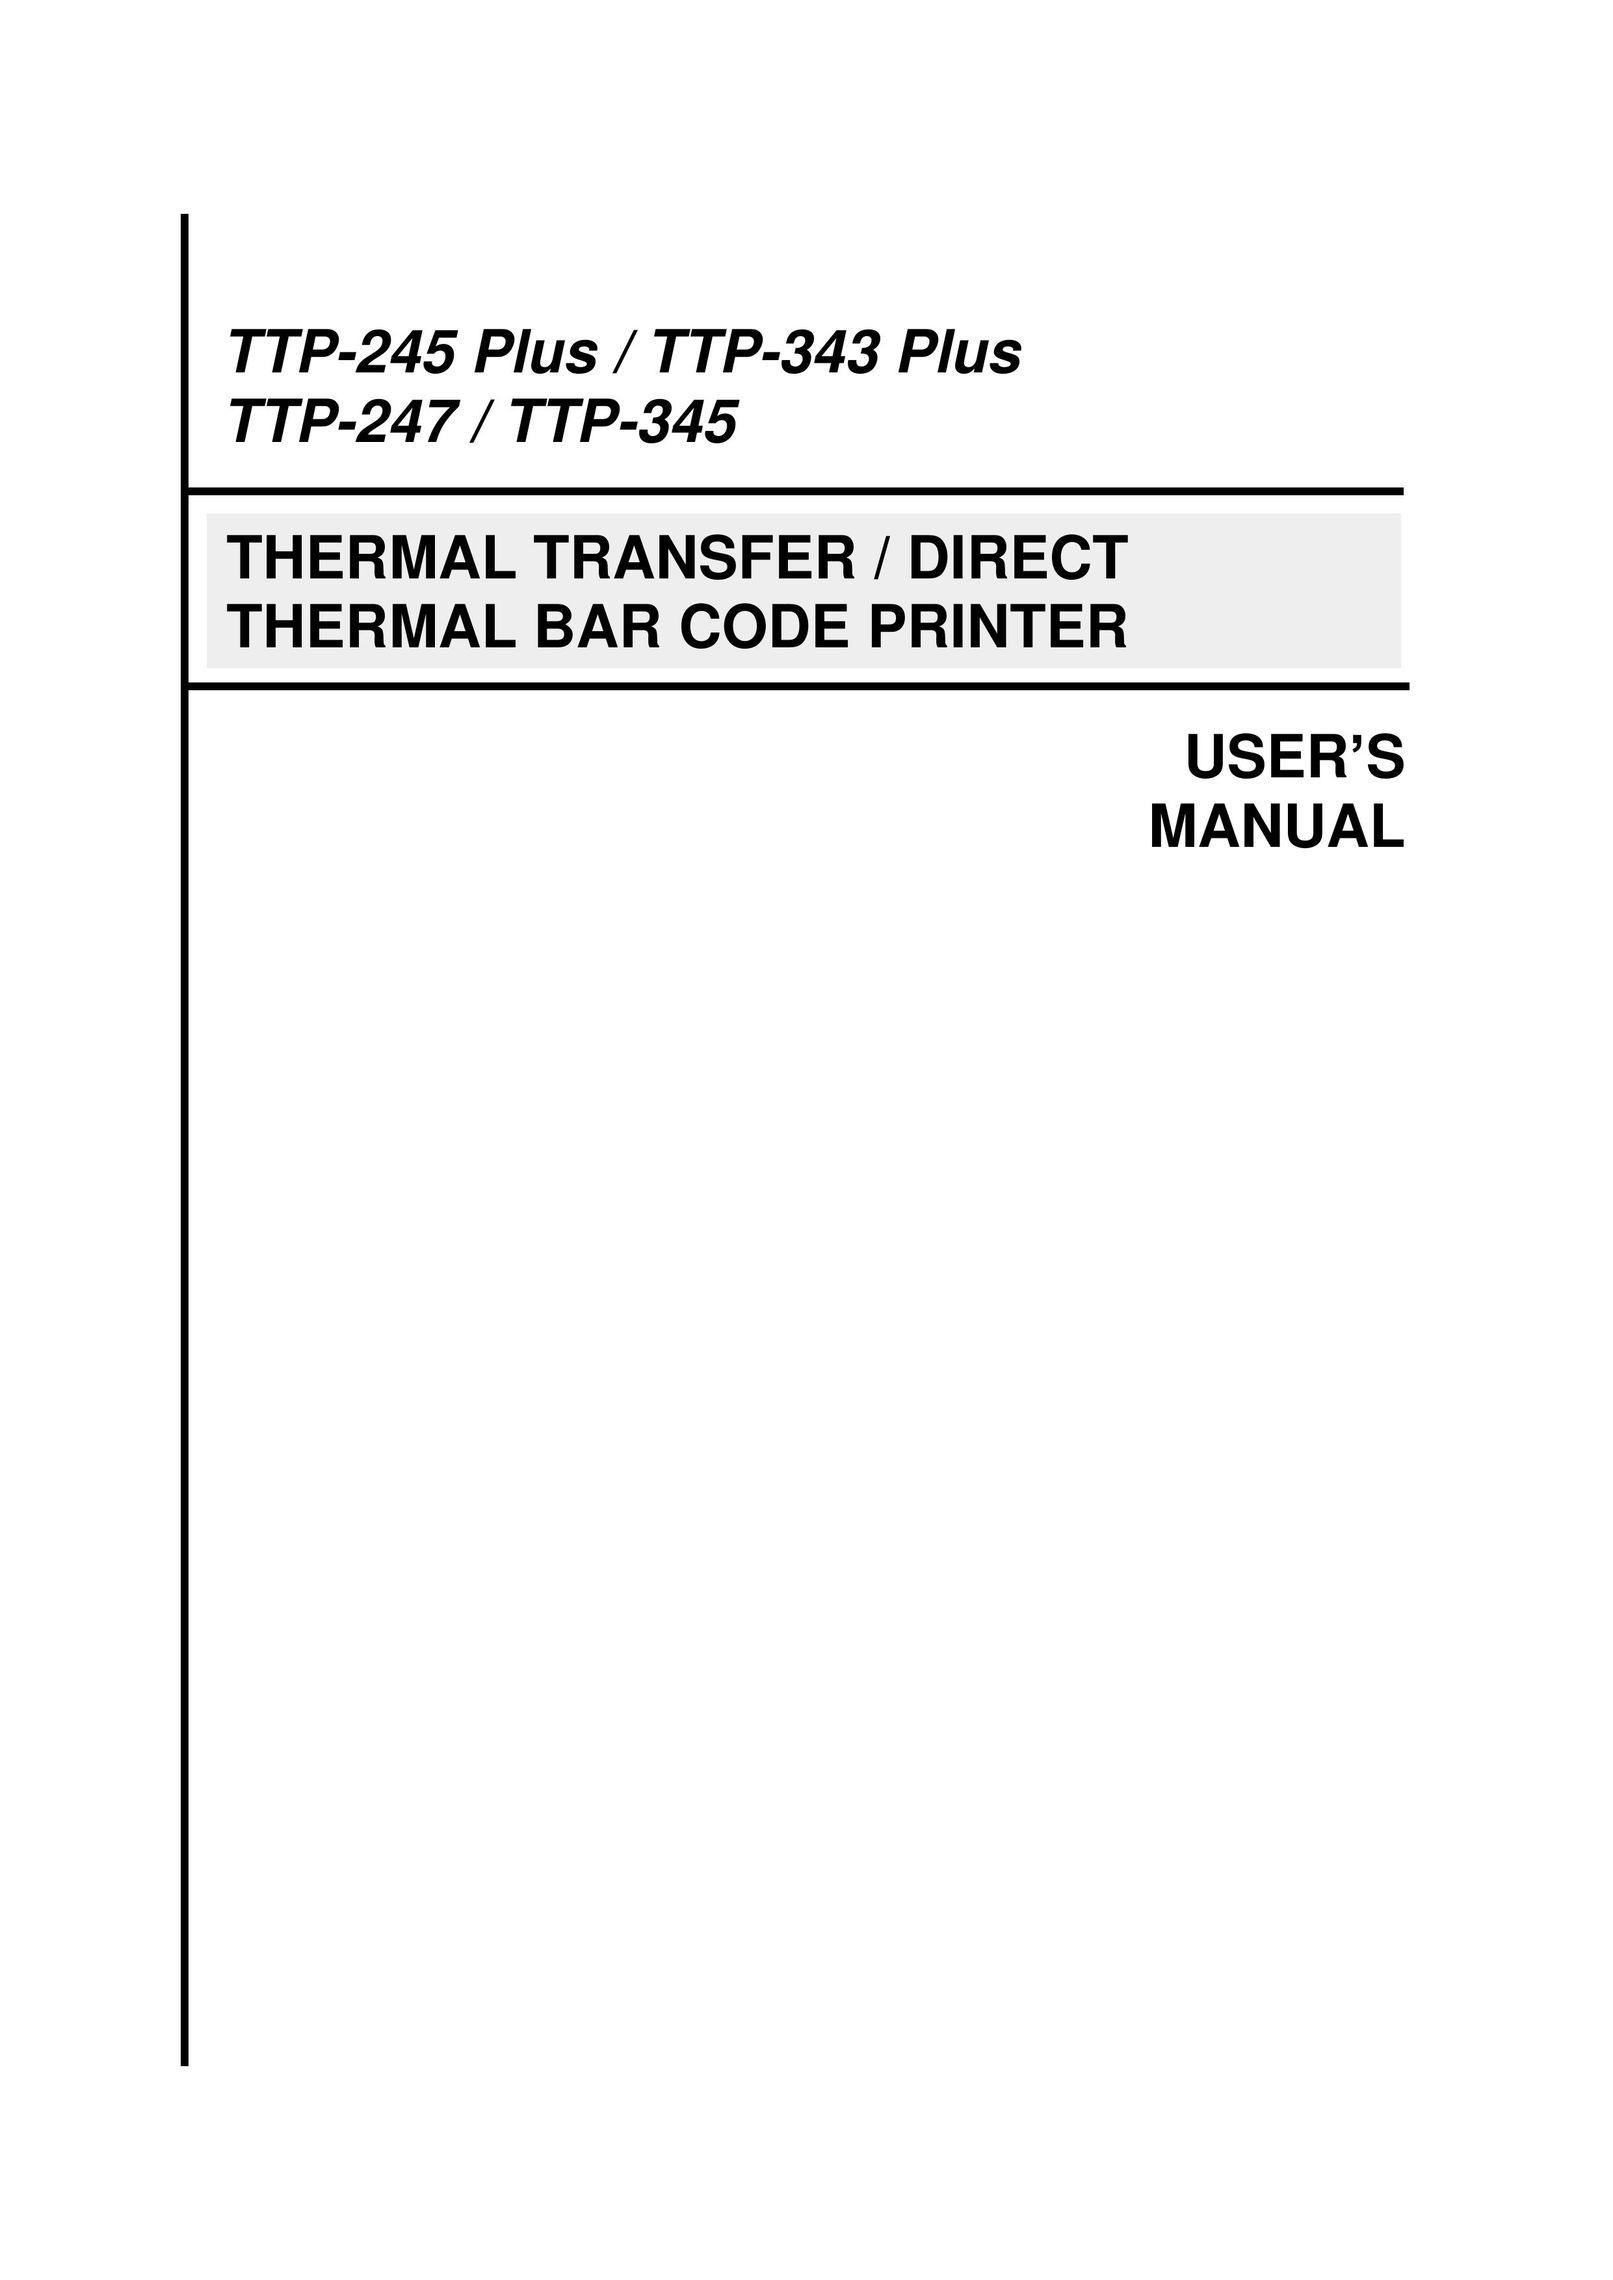 The Speaker Company TTP-245 Plus Label Maker User Manual